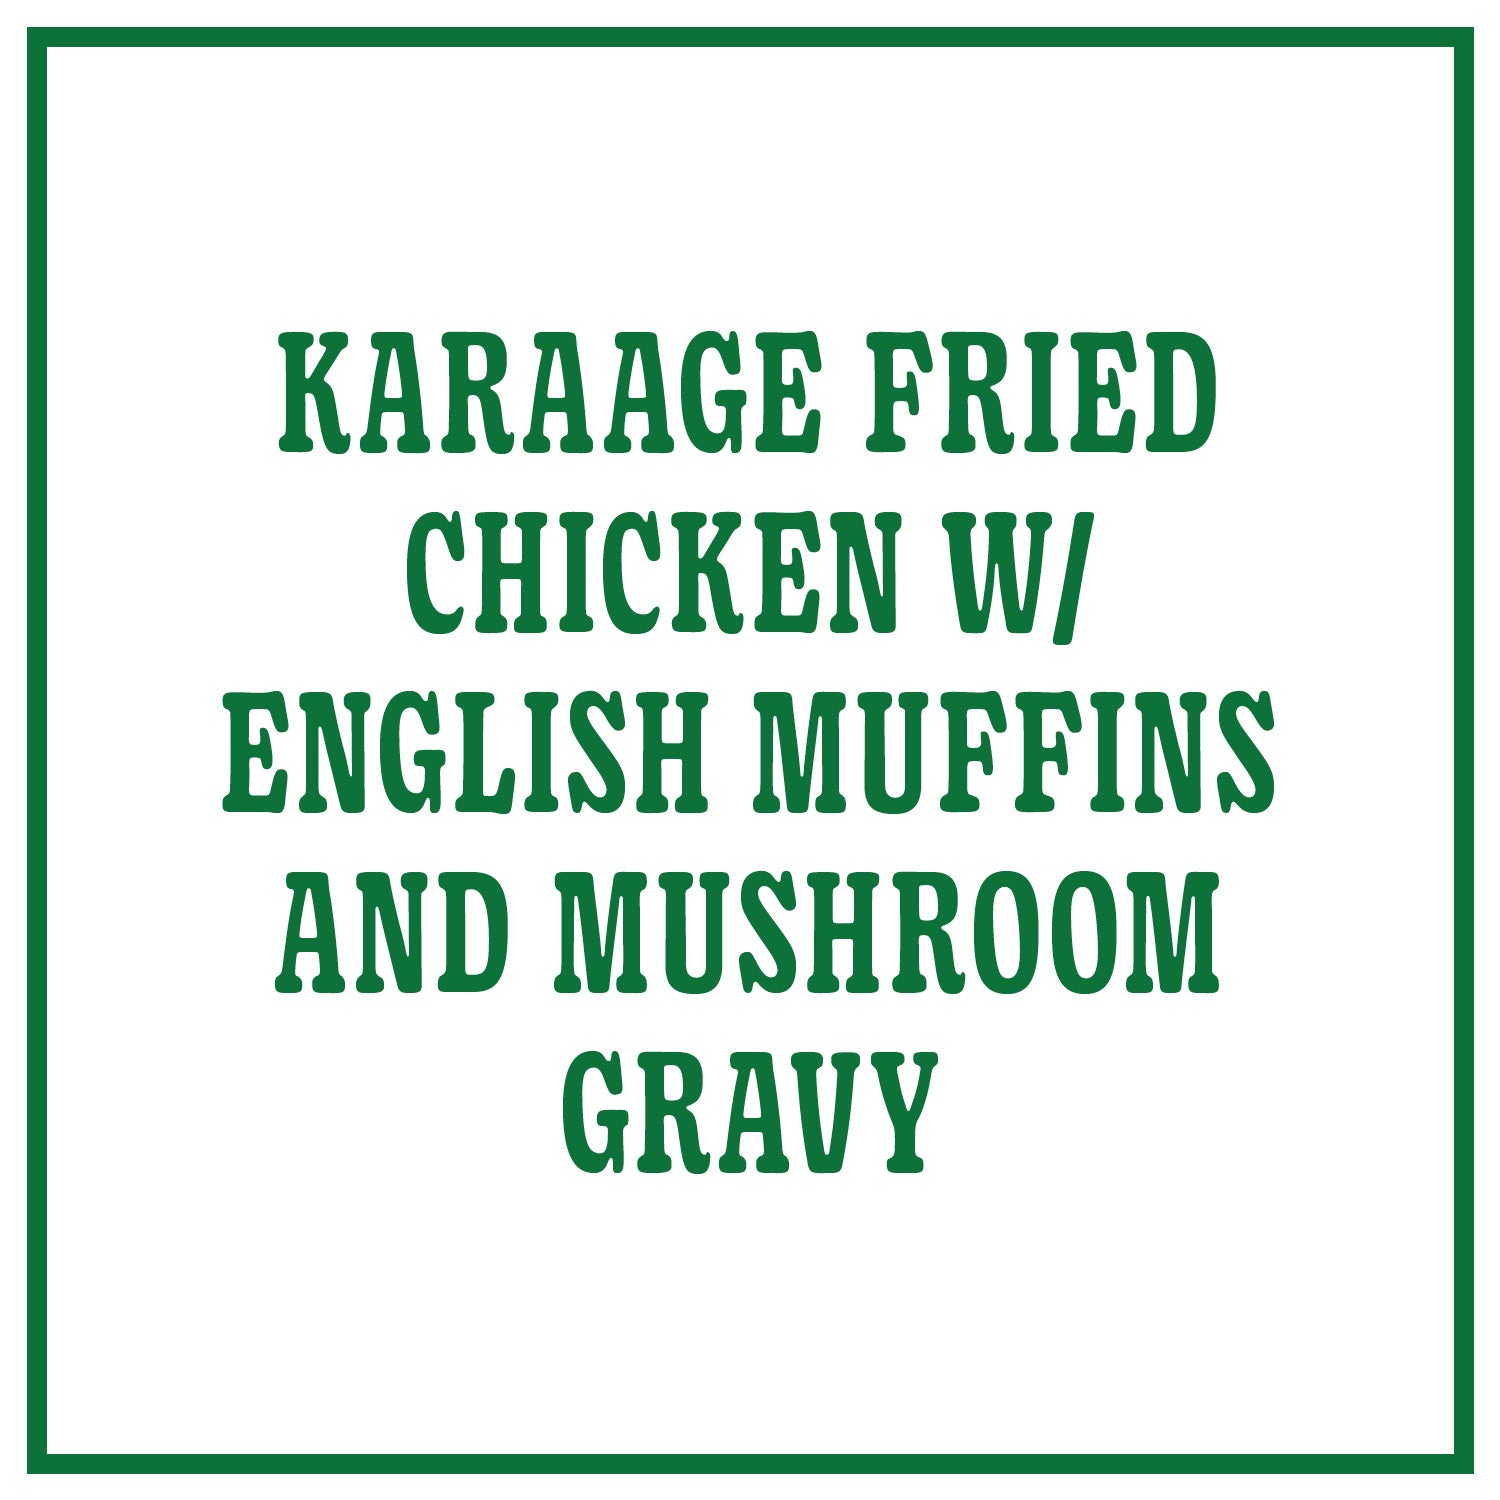 Karaage Fried Chicken with English Muffins and Mushroom Gravy